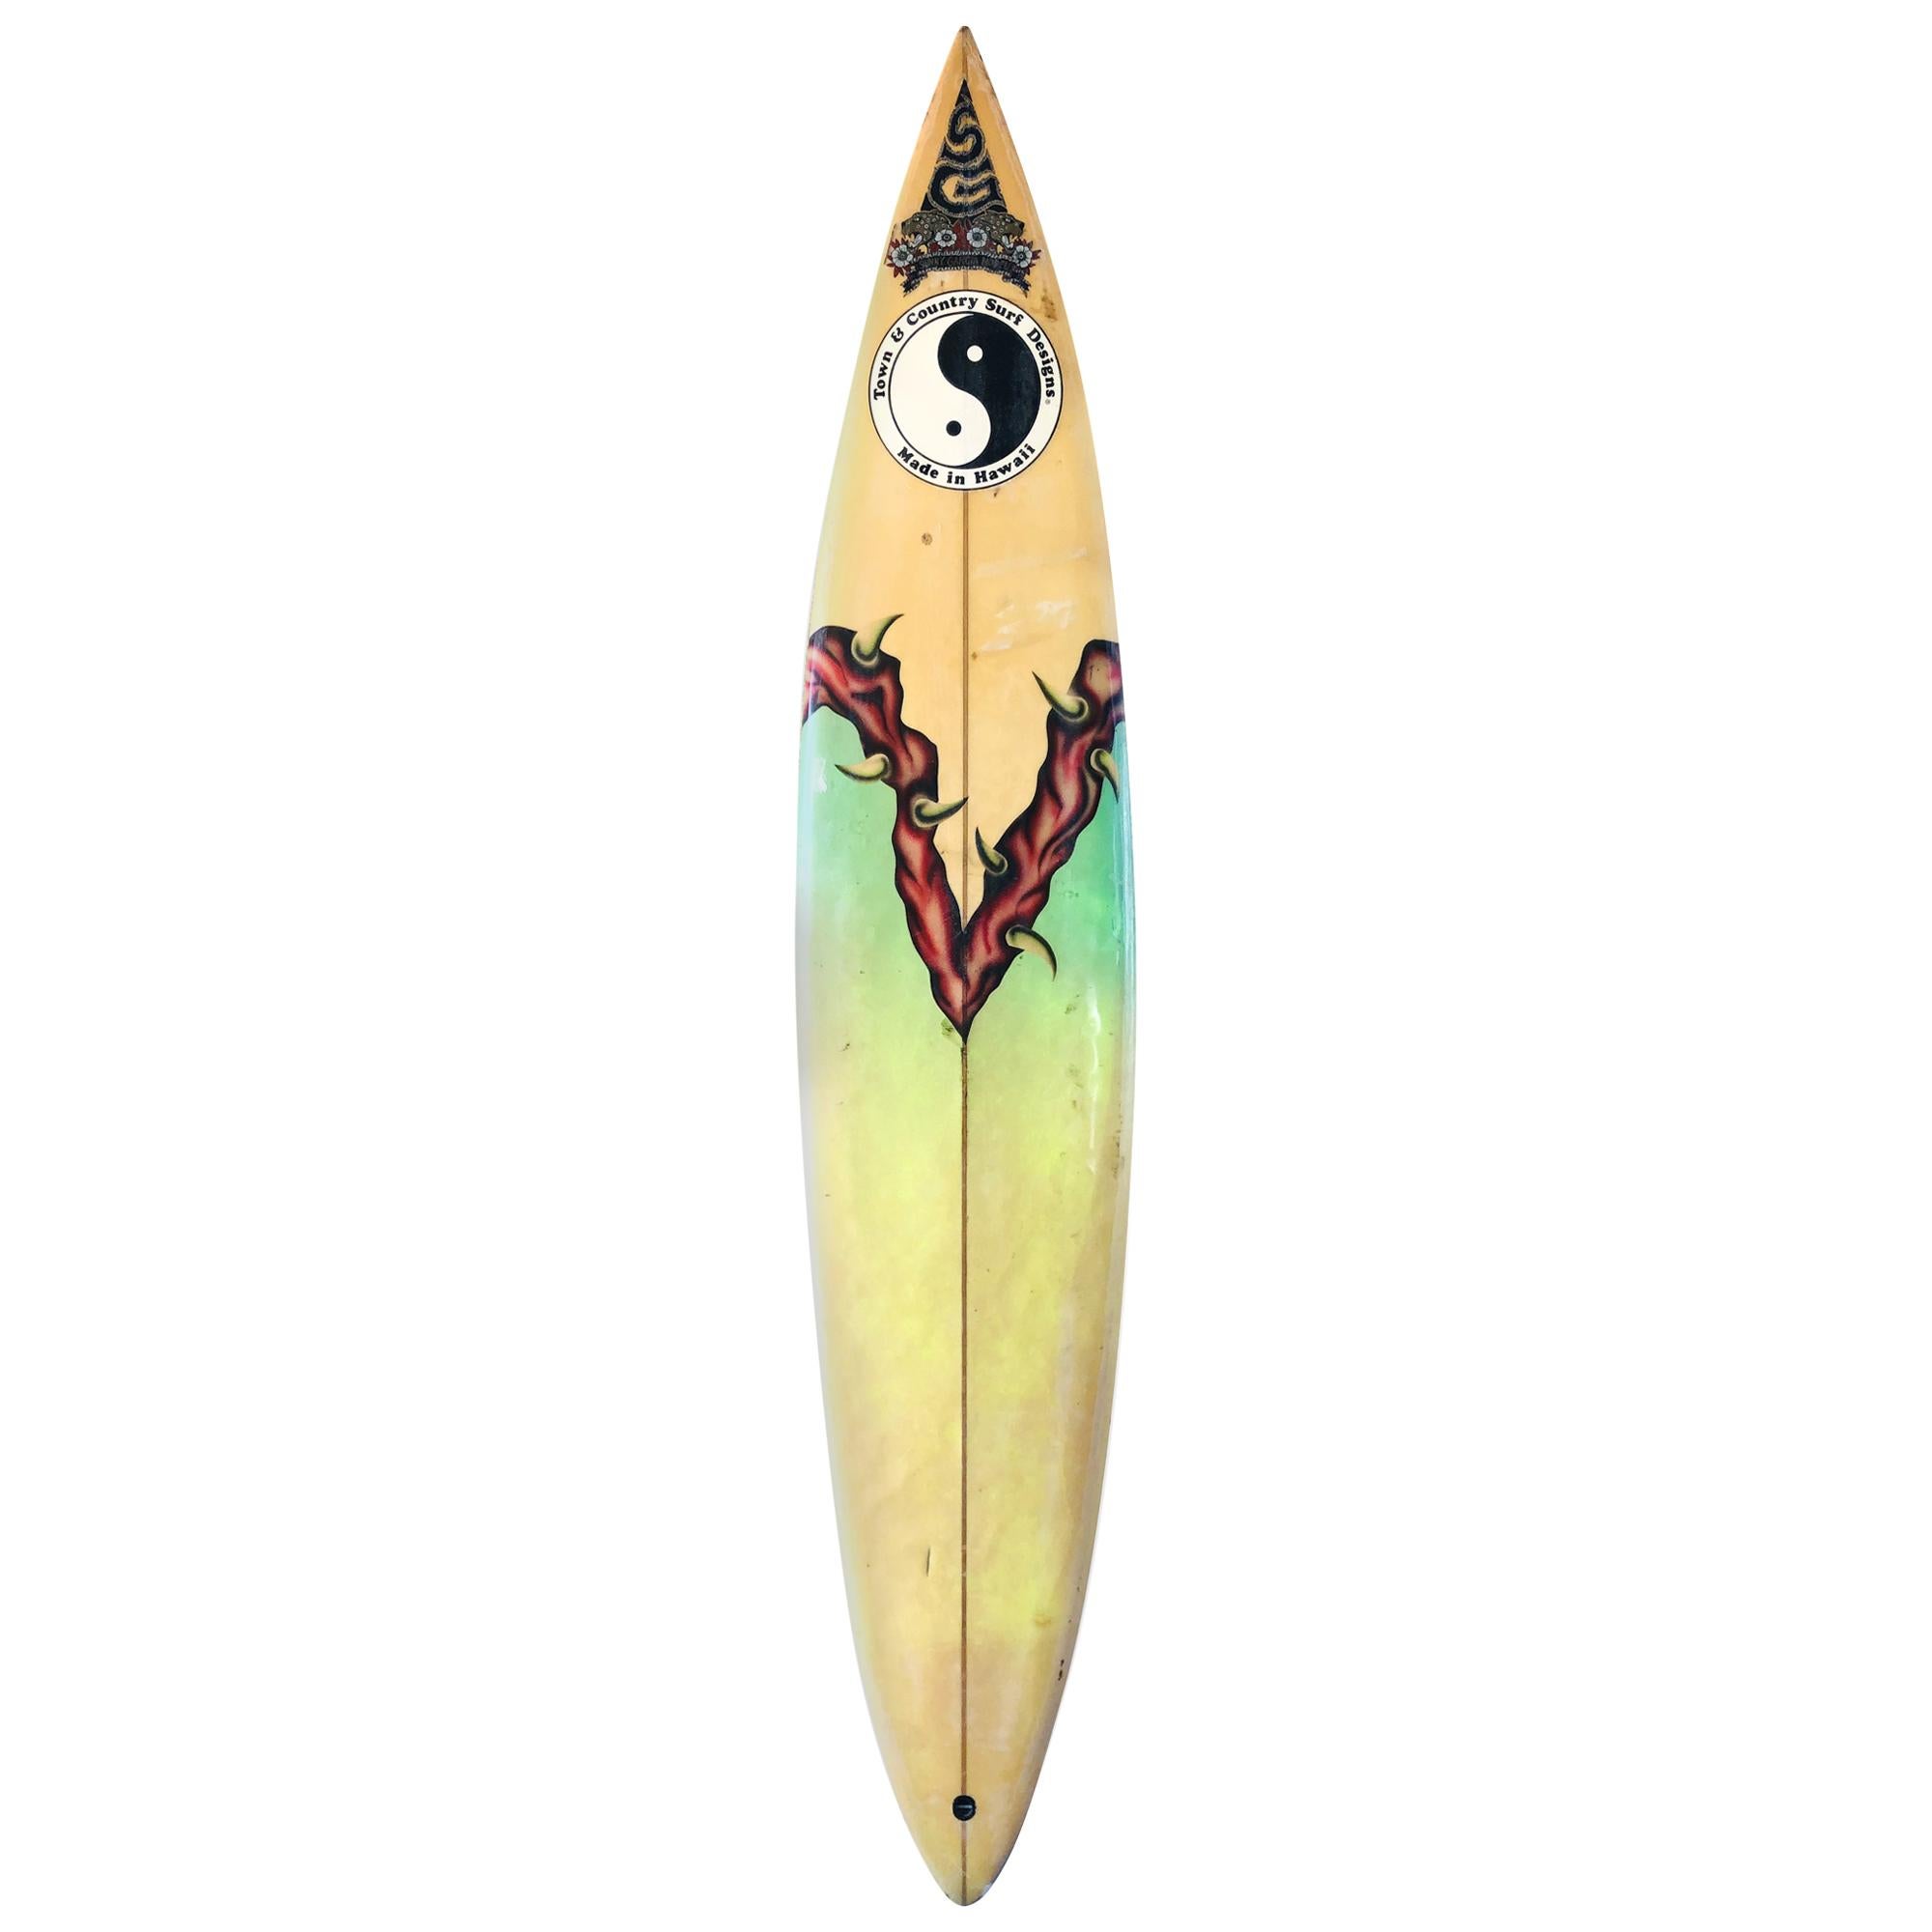 Vintage 1990s World Champion Sunny Garcia Personal T&C Surfboard